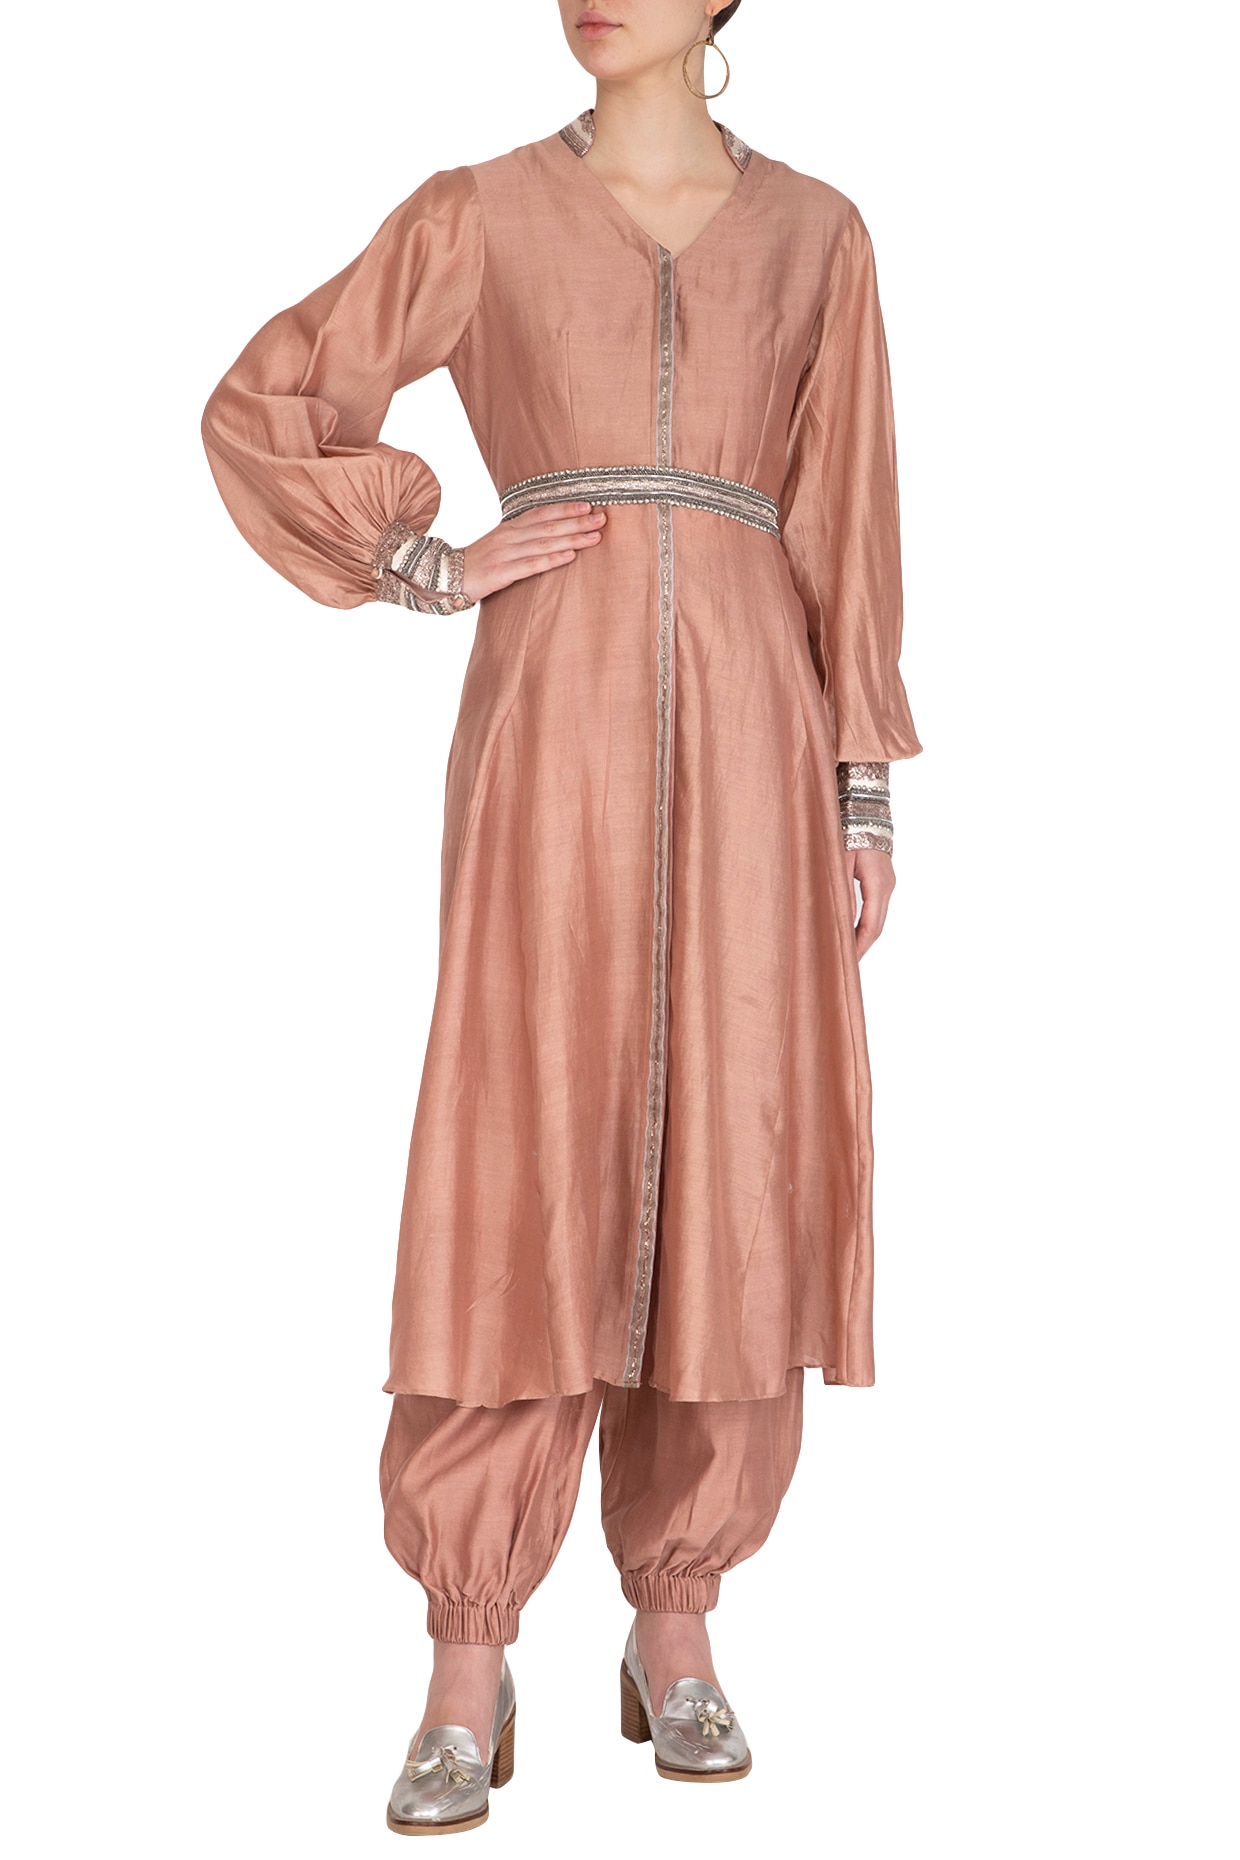 Shop Designer Anarkali Suits Online, Salwar Kameez, Punjabi Suits | Punjabi  Salwar Kameez Designs | Party wear dresses, Party wear lehenga, Lehenga  style